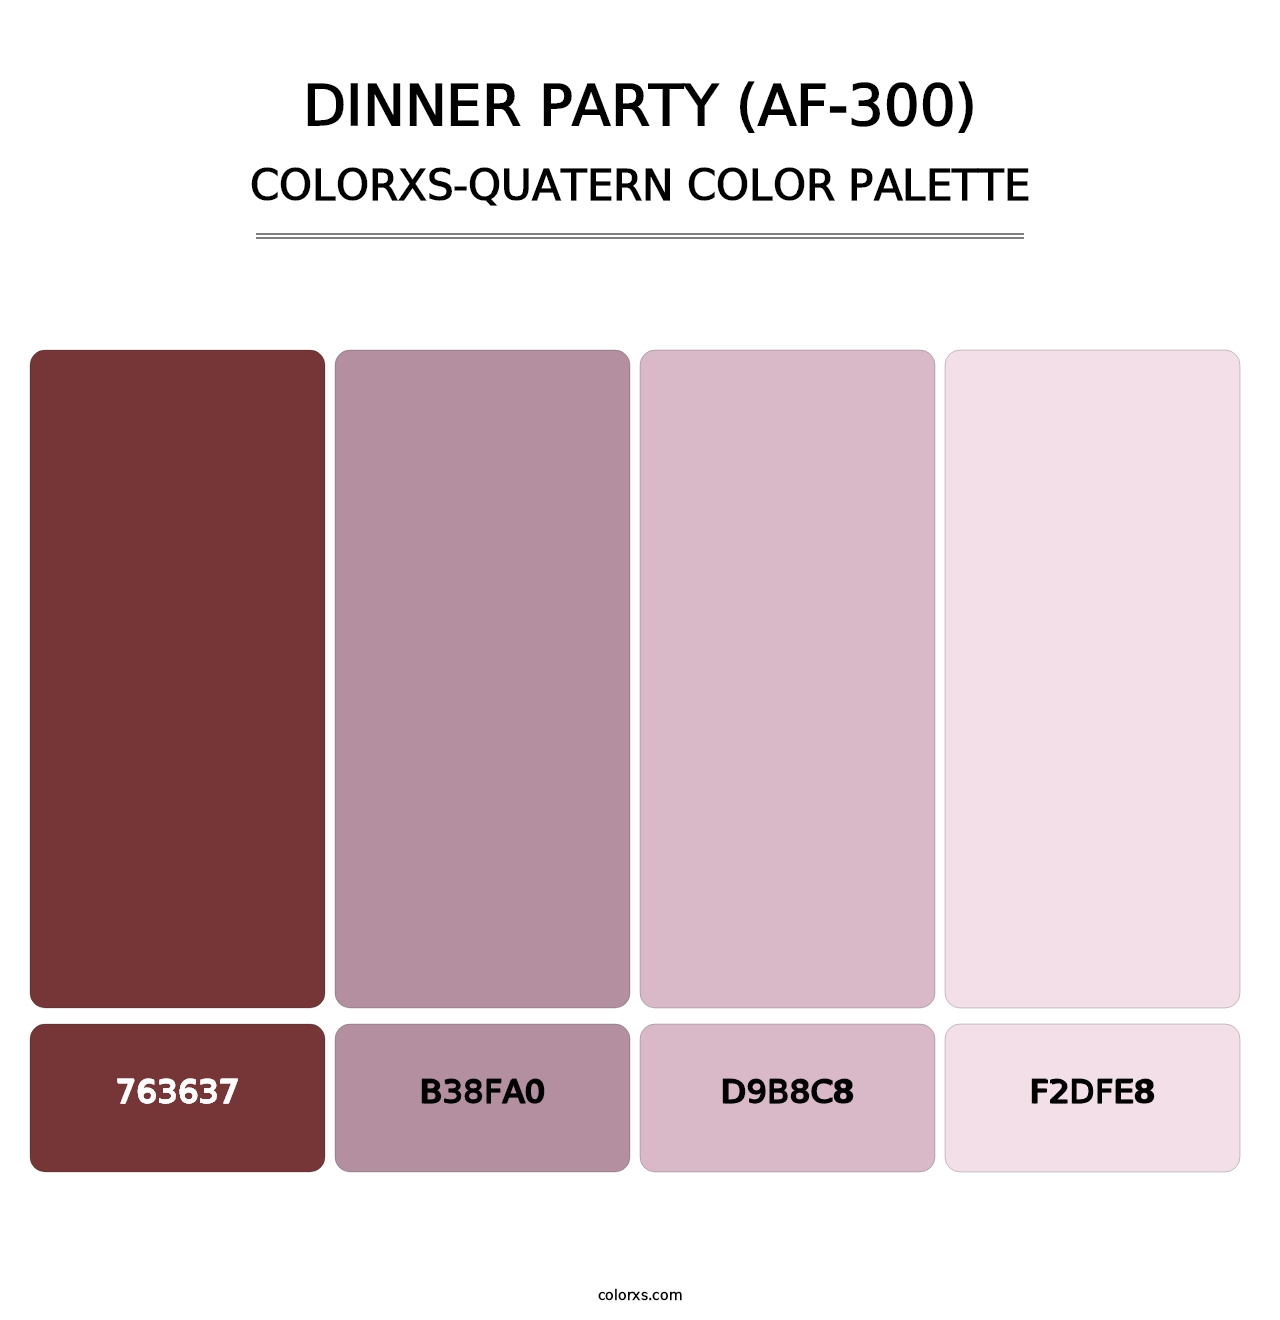 Dinner Party (AF-300) - Colorxs Quatern Palette